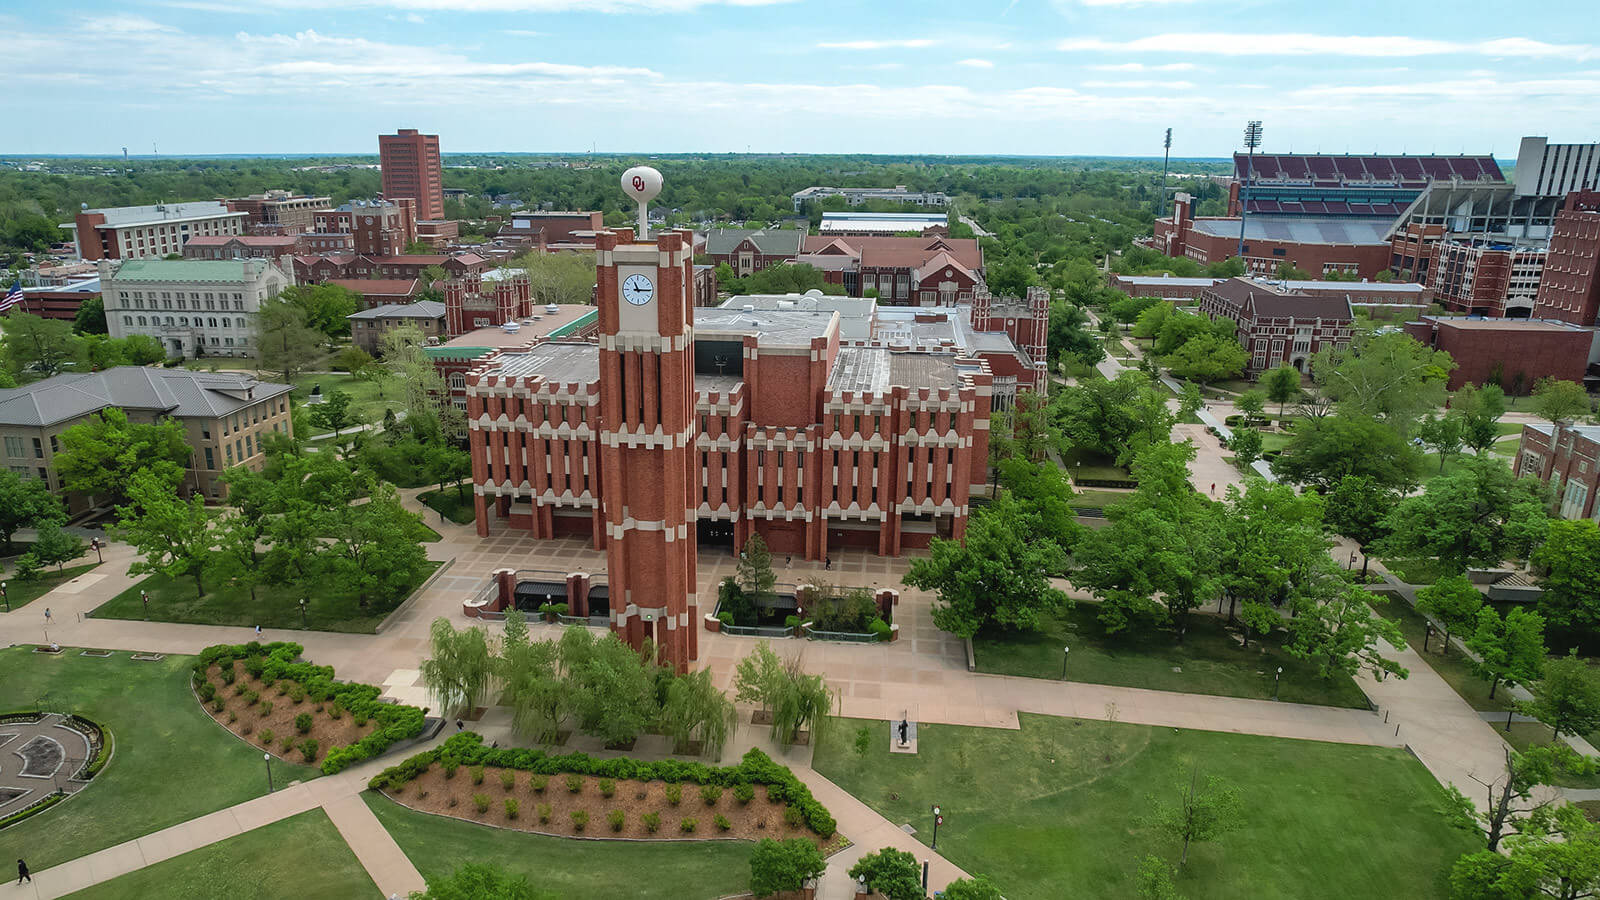 University of Oklahoma-Norman Campus